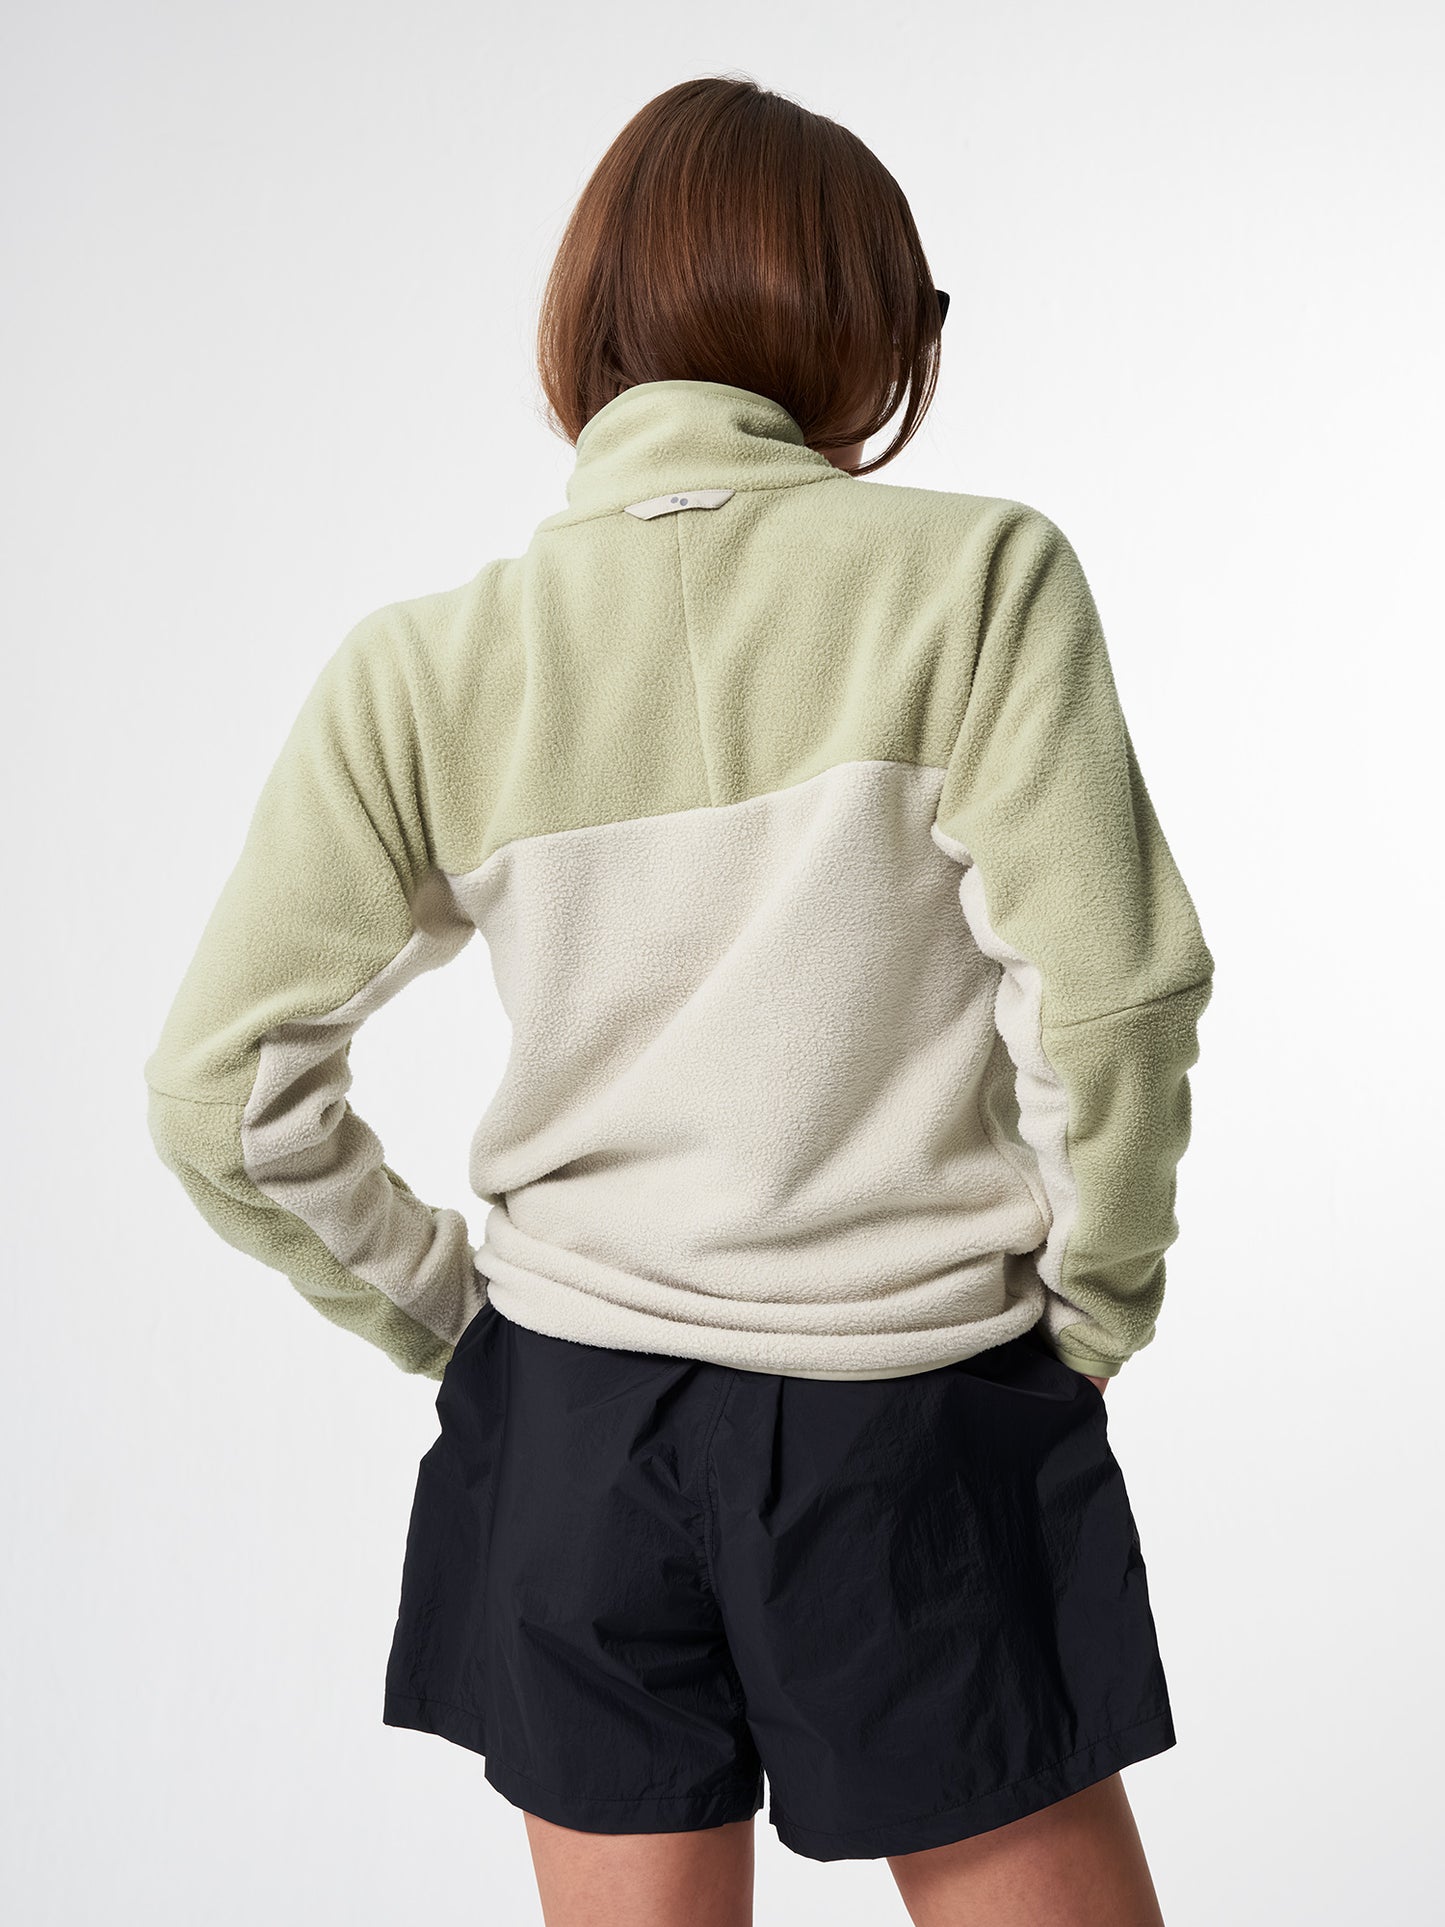 pinqponq-Fleece-Pullover-Unisex-Tune-Olive-model-back